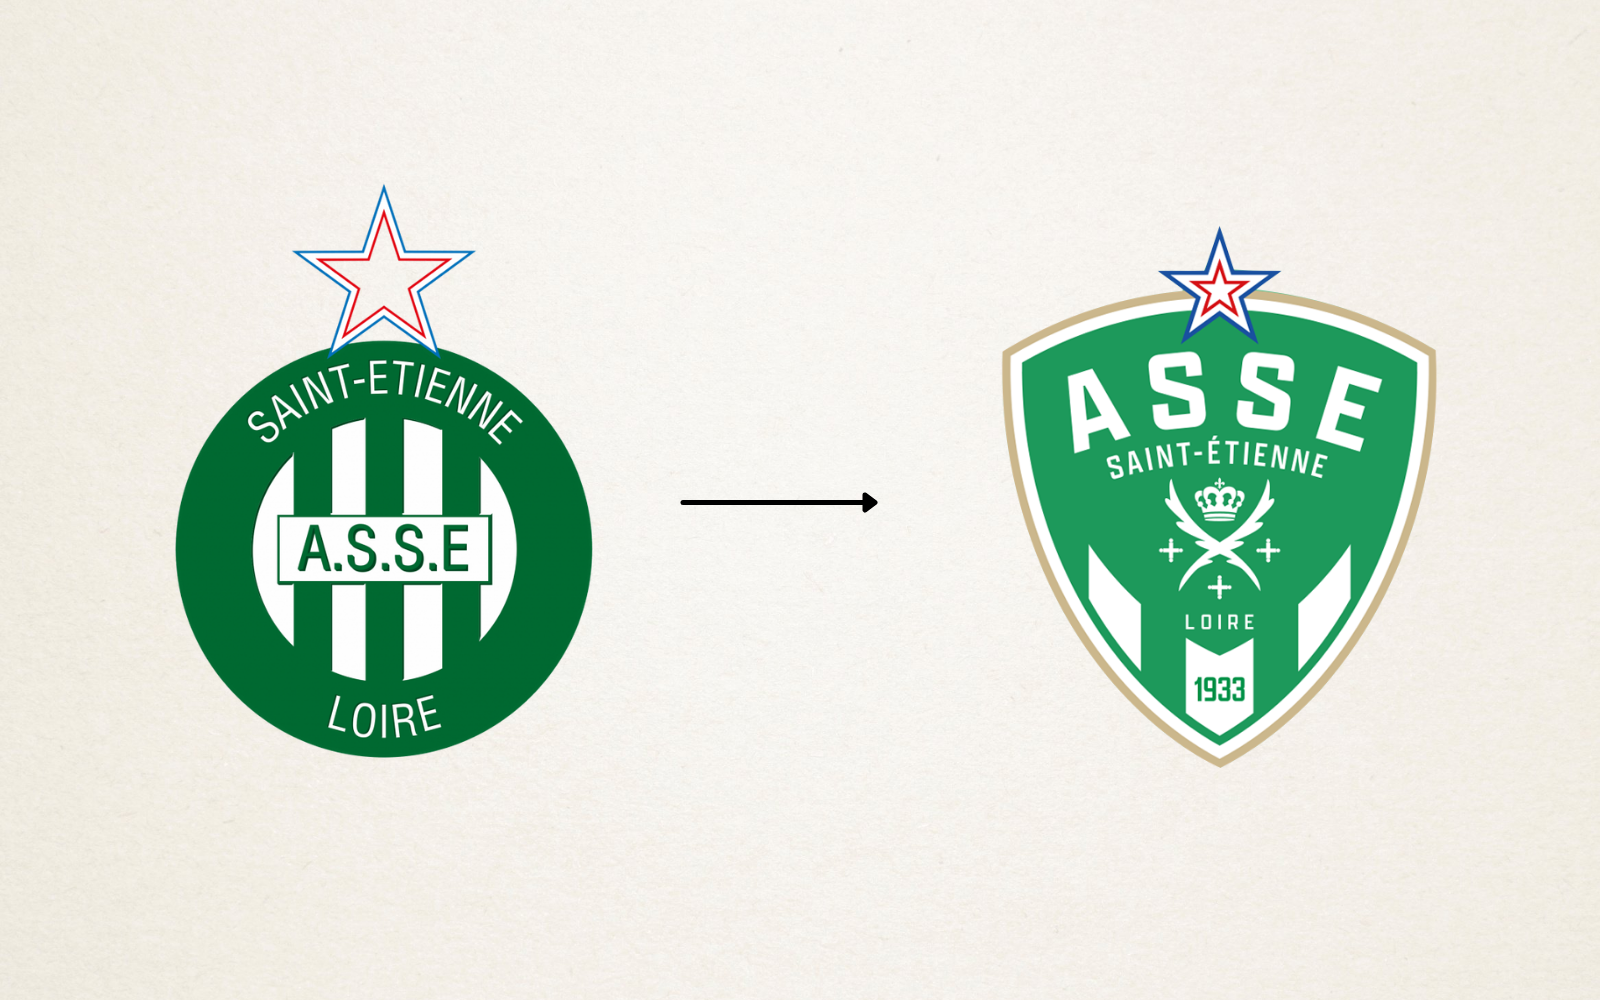 Saint-Étienne has changed its logo